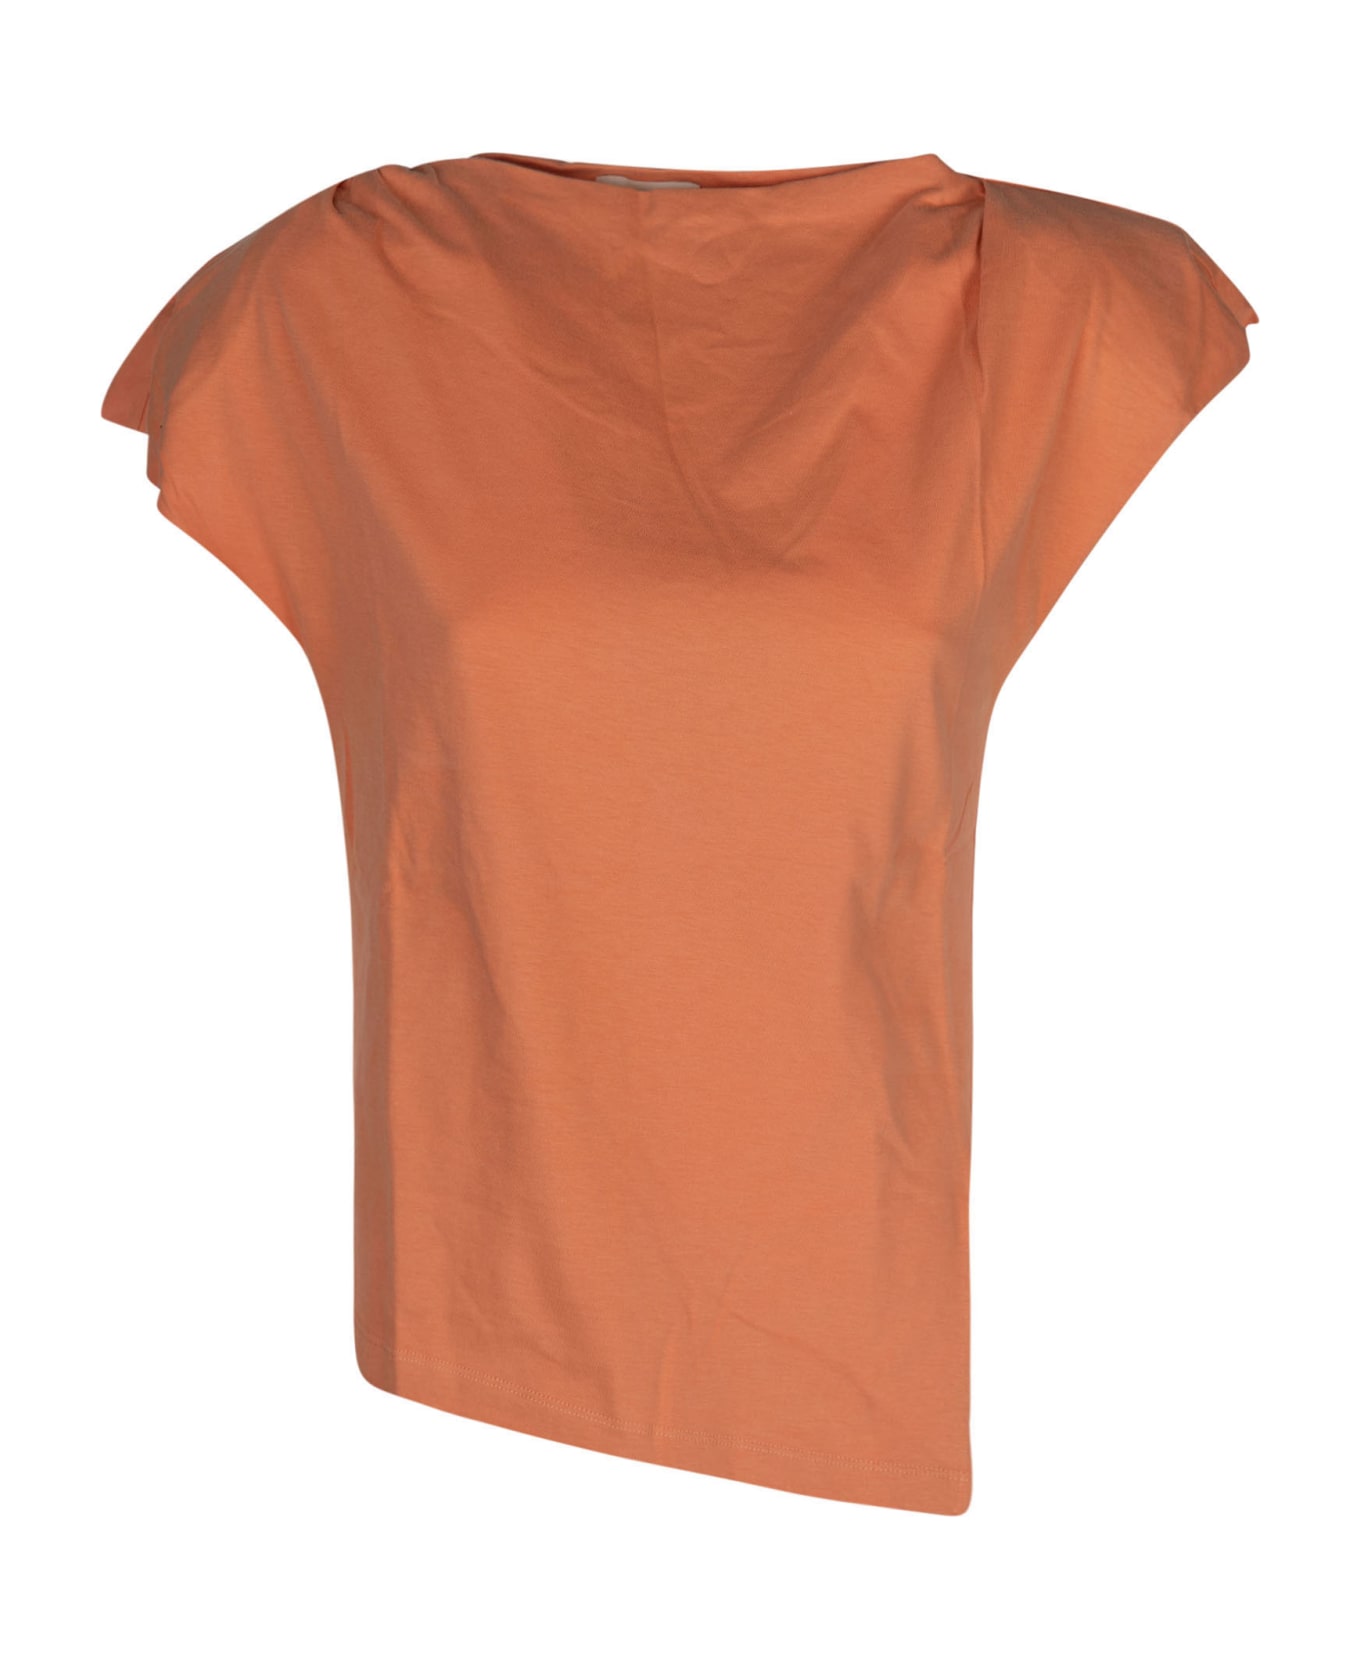 Isabel Marant Sebani T-shirt - Peach Tシャツ